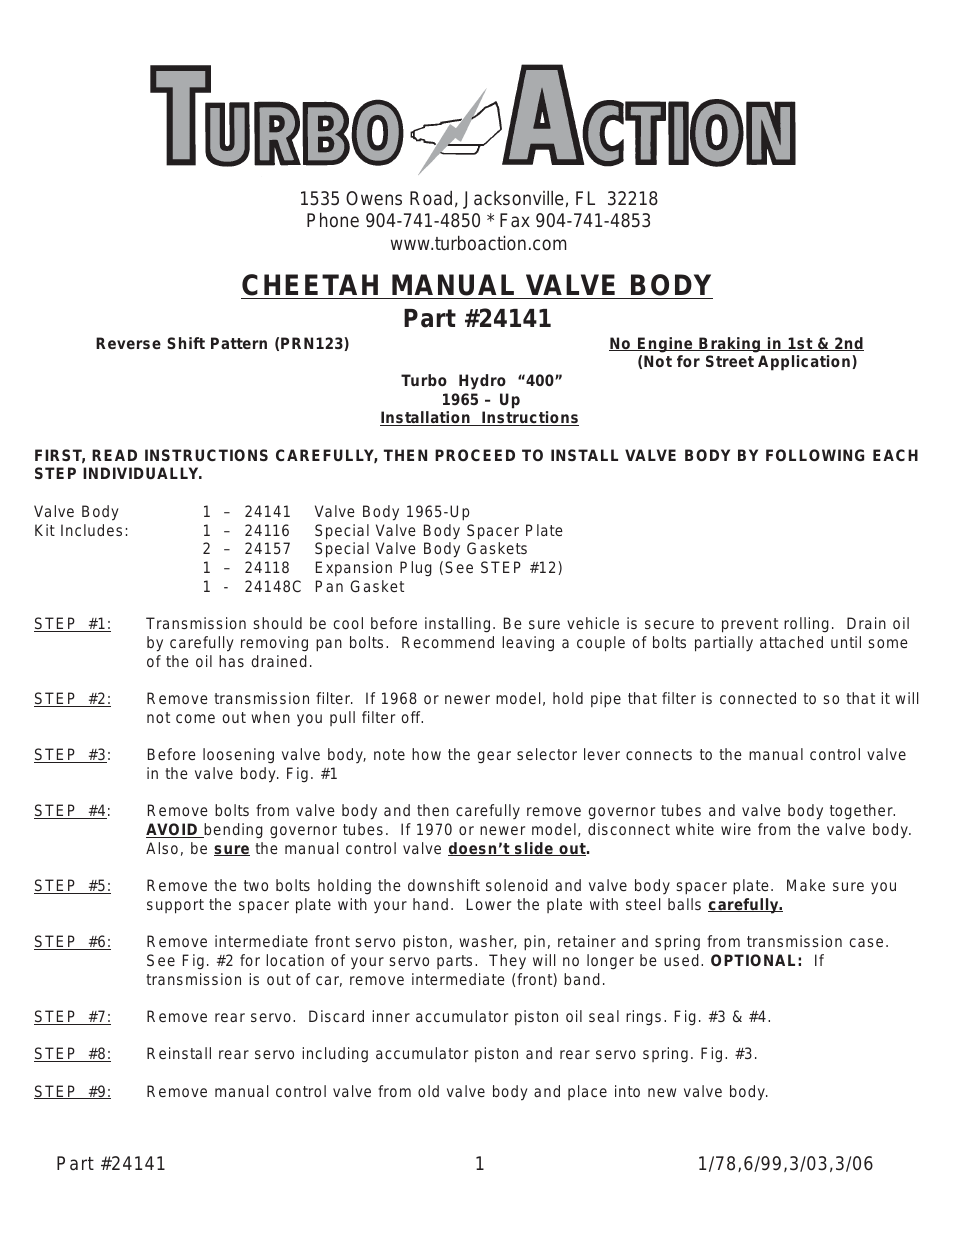 24141 Turbo Hydro 400 Manual Valve Body (PRN123)